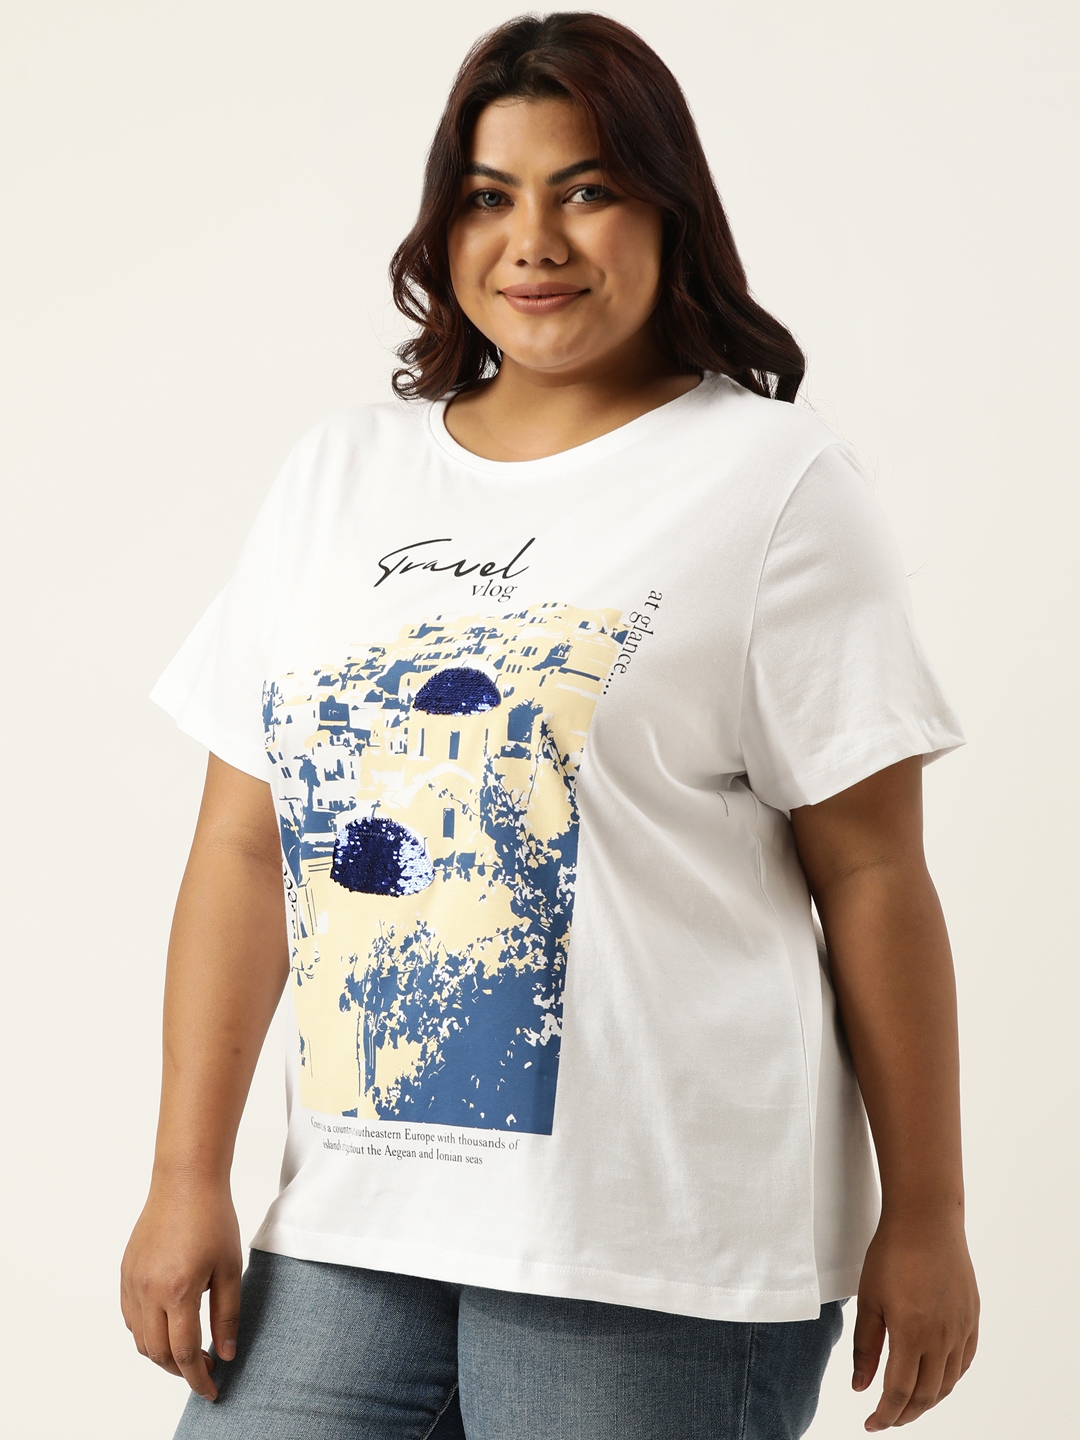 Plus Size White Graphic Printed Round Neck Bio Wash tshirt For women